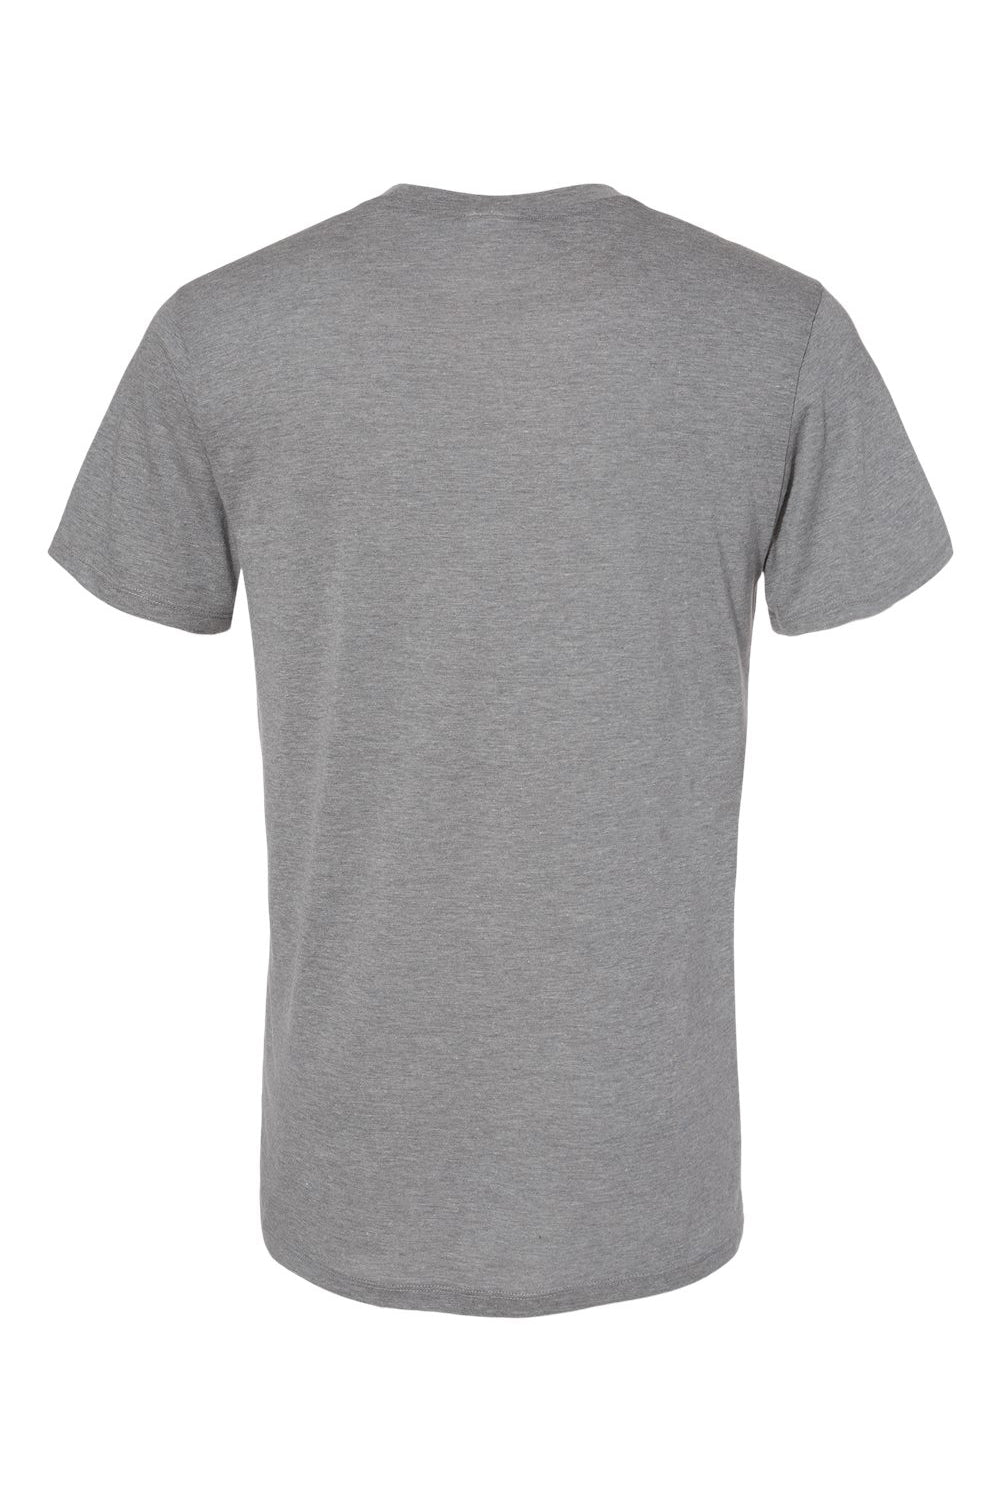 Augusta Sportswear 3065 Mens Short Sleeve Crewneck T-Shirt Heather Grey Flat Back